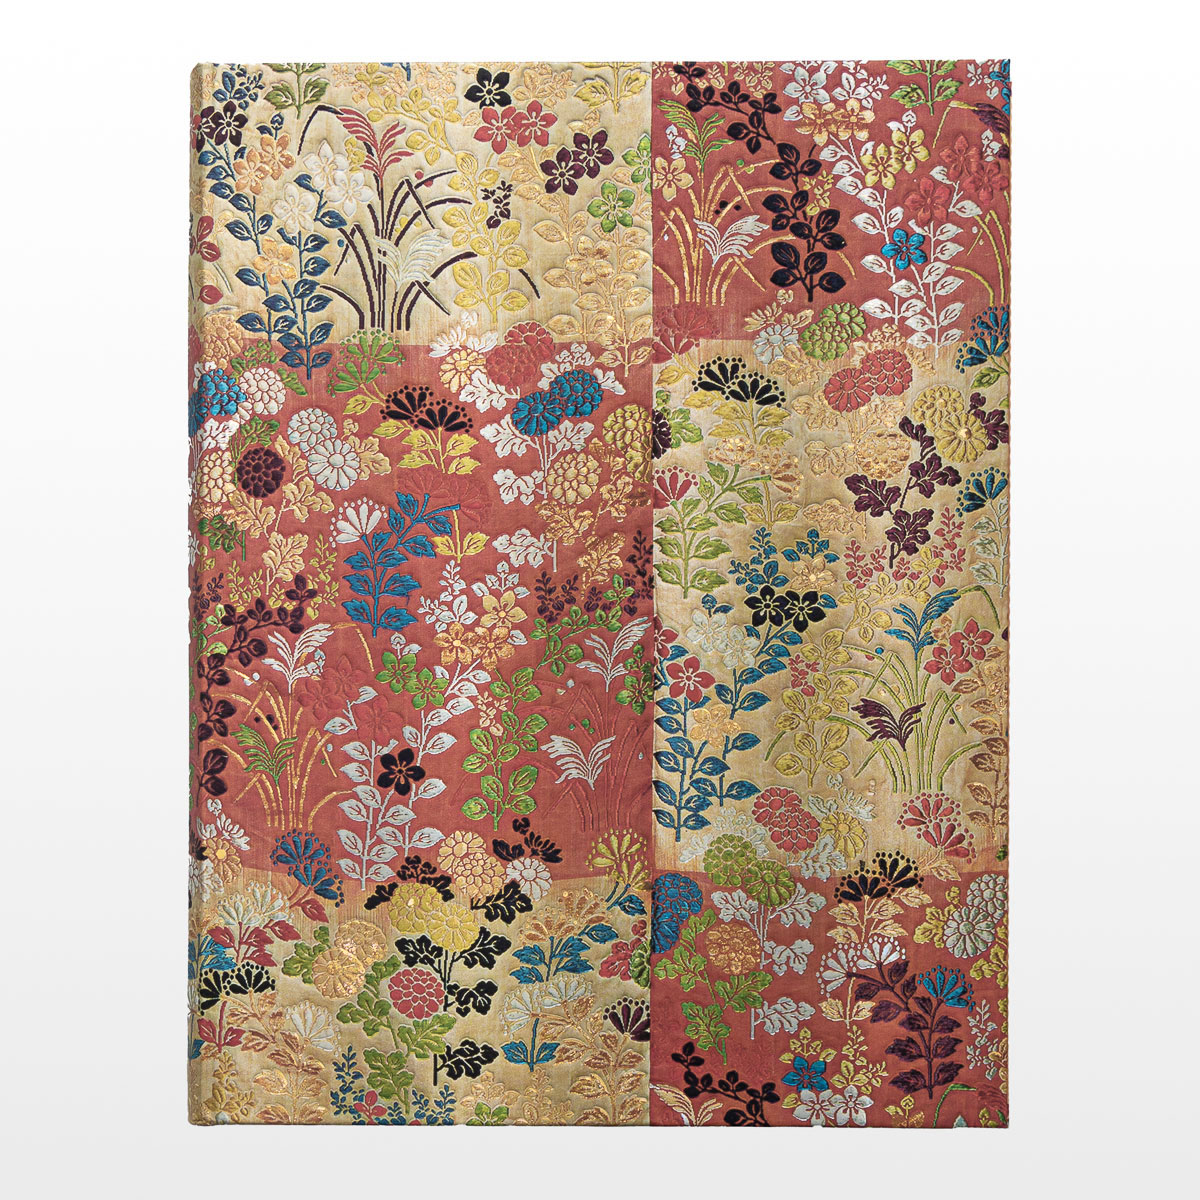 Carnet Paperblanks : Kara-ori , Kimono Japonais (détail 4) 